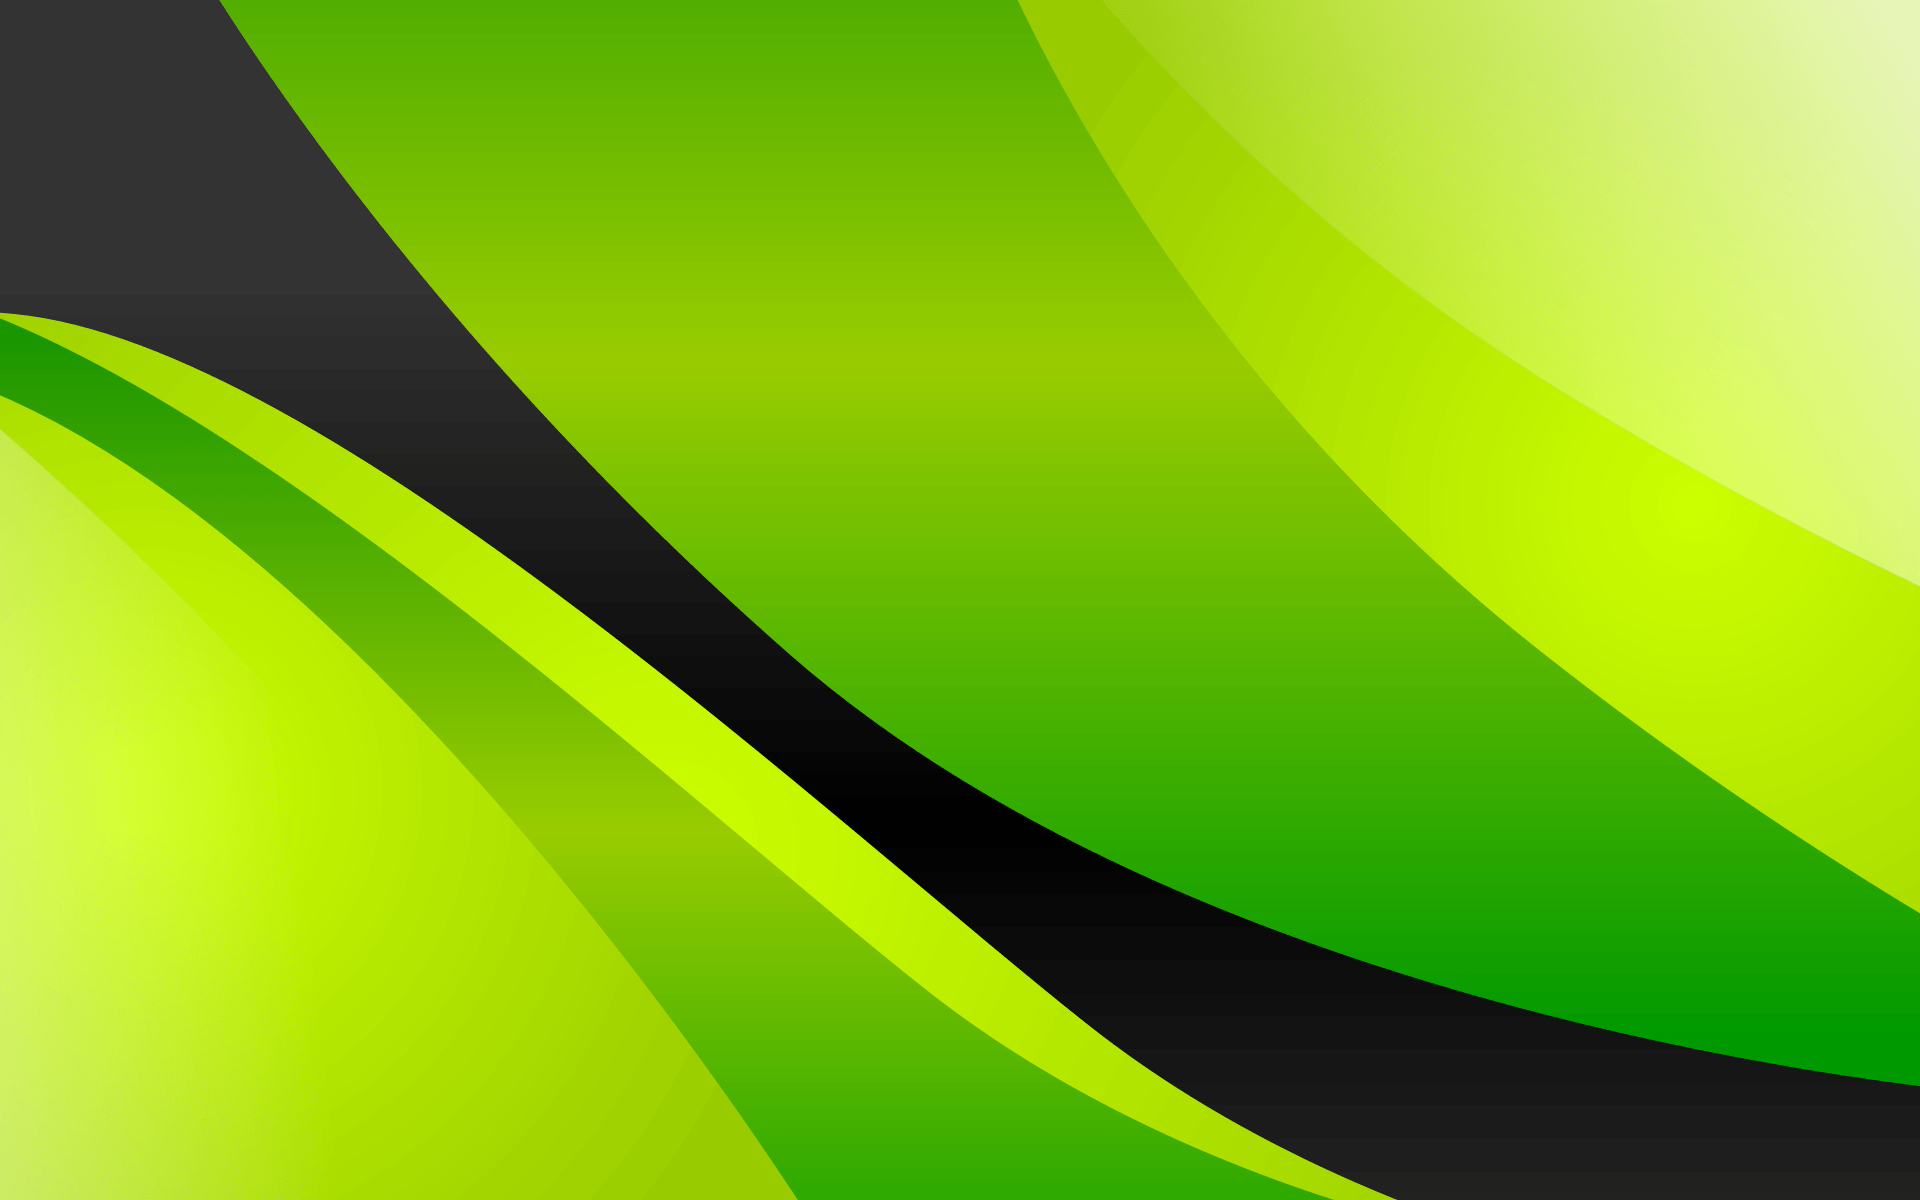 3D & Abstract Green Abstract wallpaper Desktop, Phone, Tablet